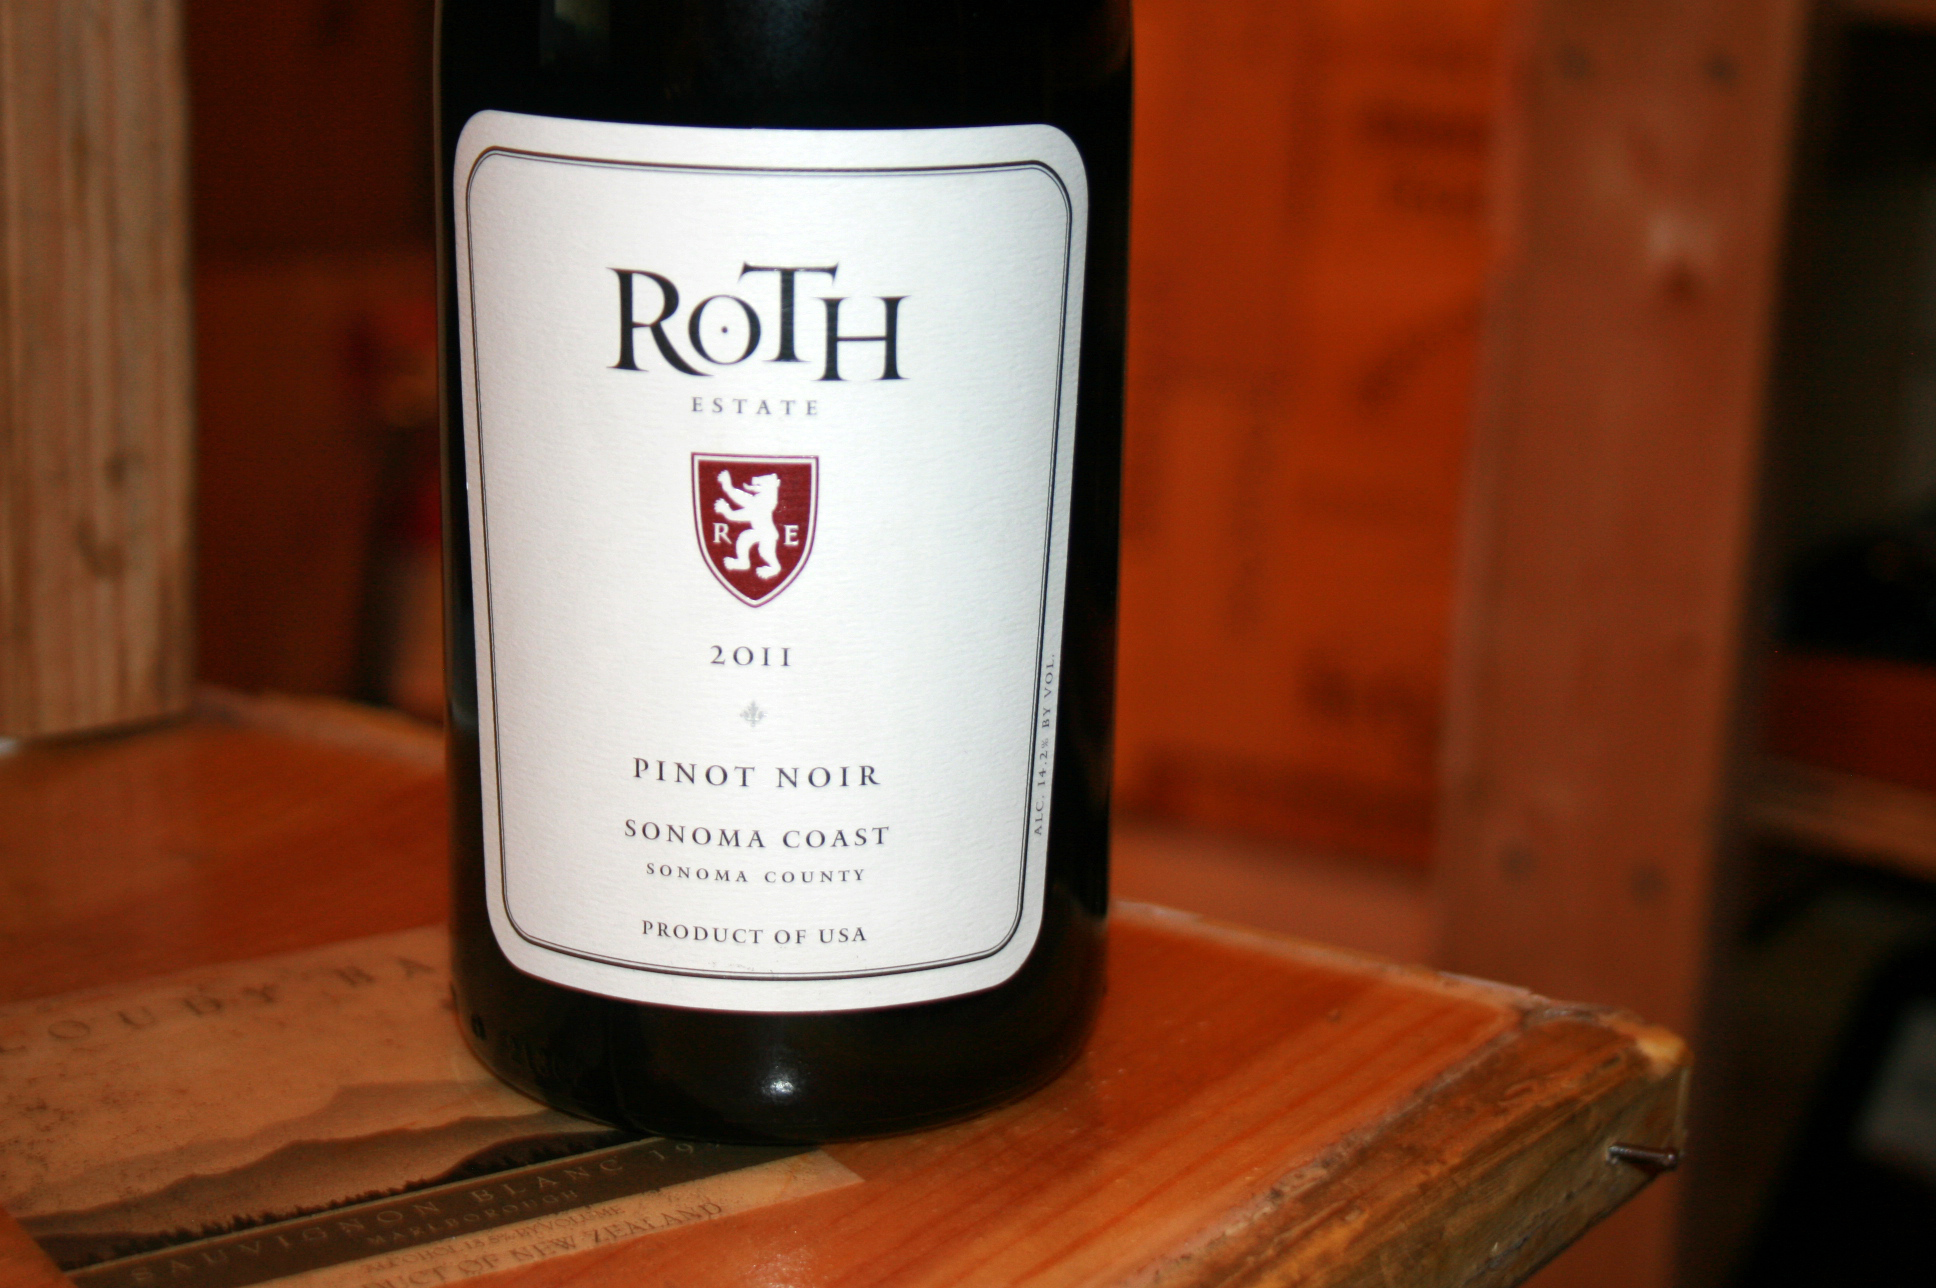 2012 Roth Pinot Noir Sonoma Coast - click image for full description